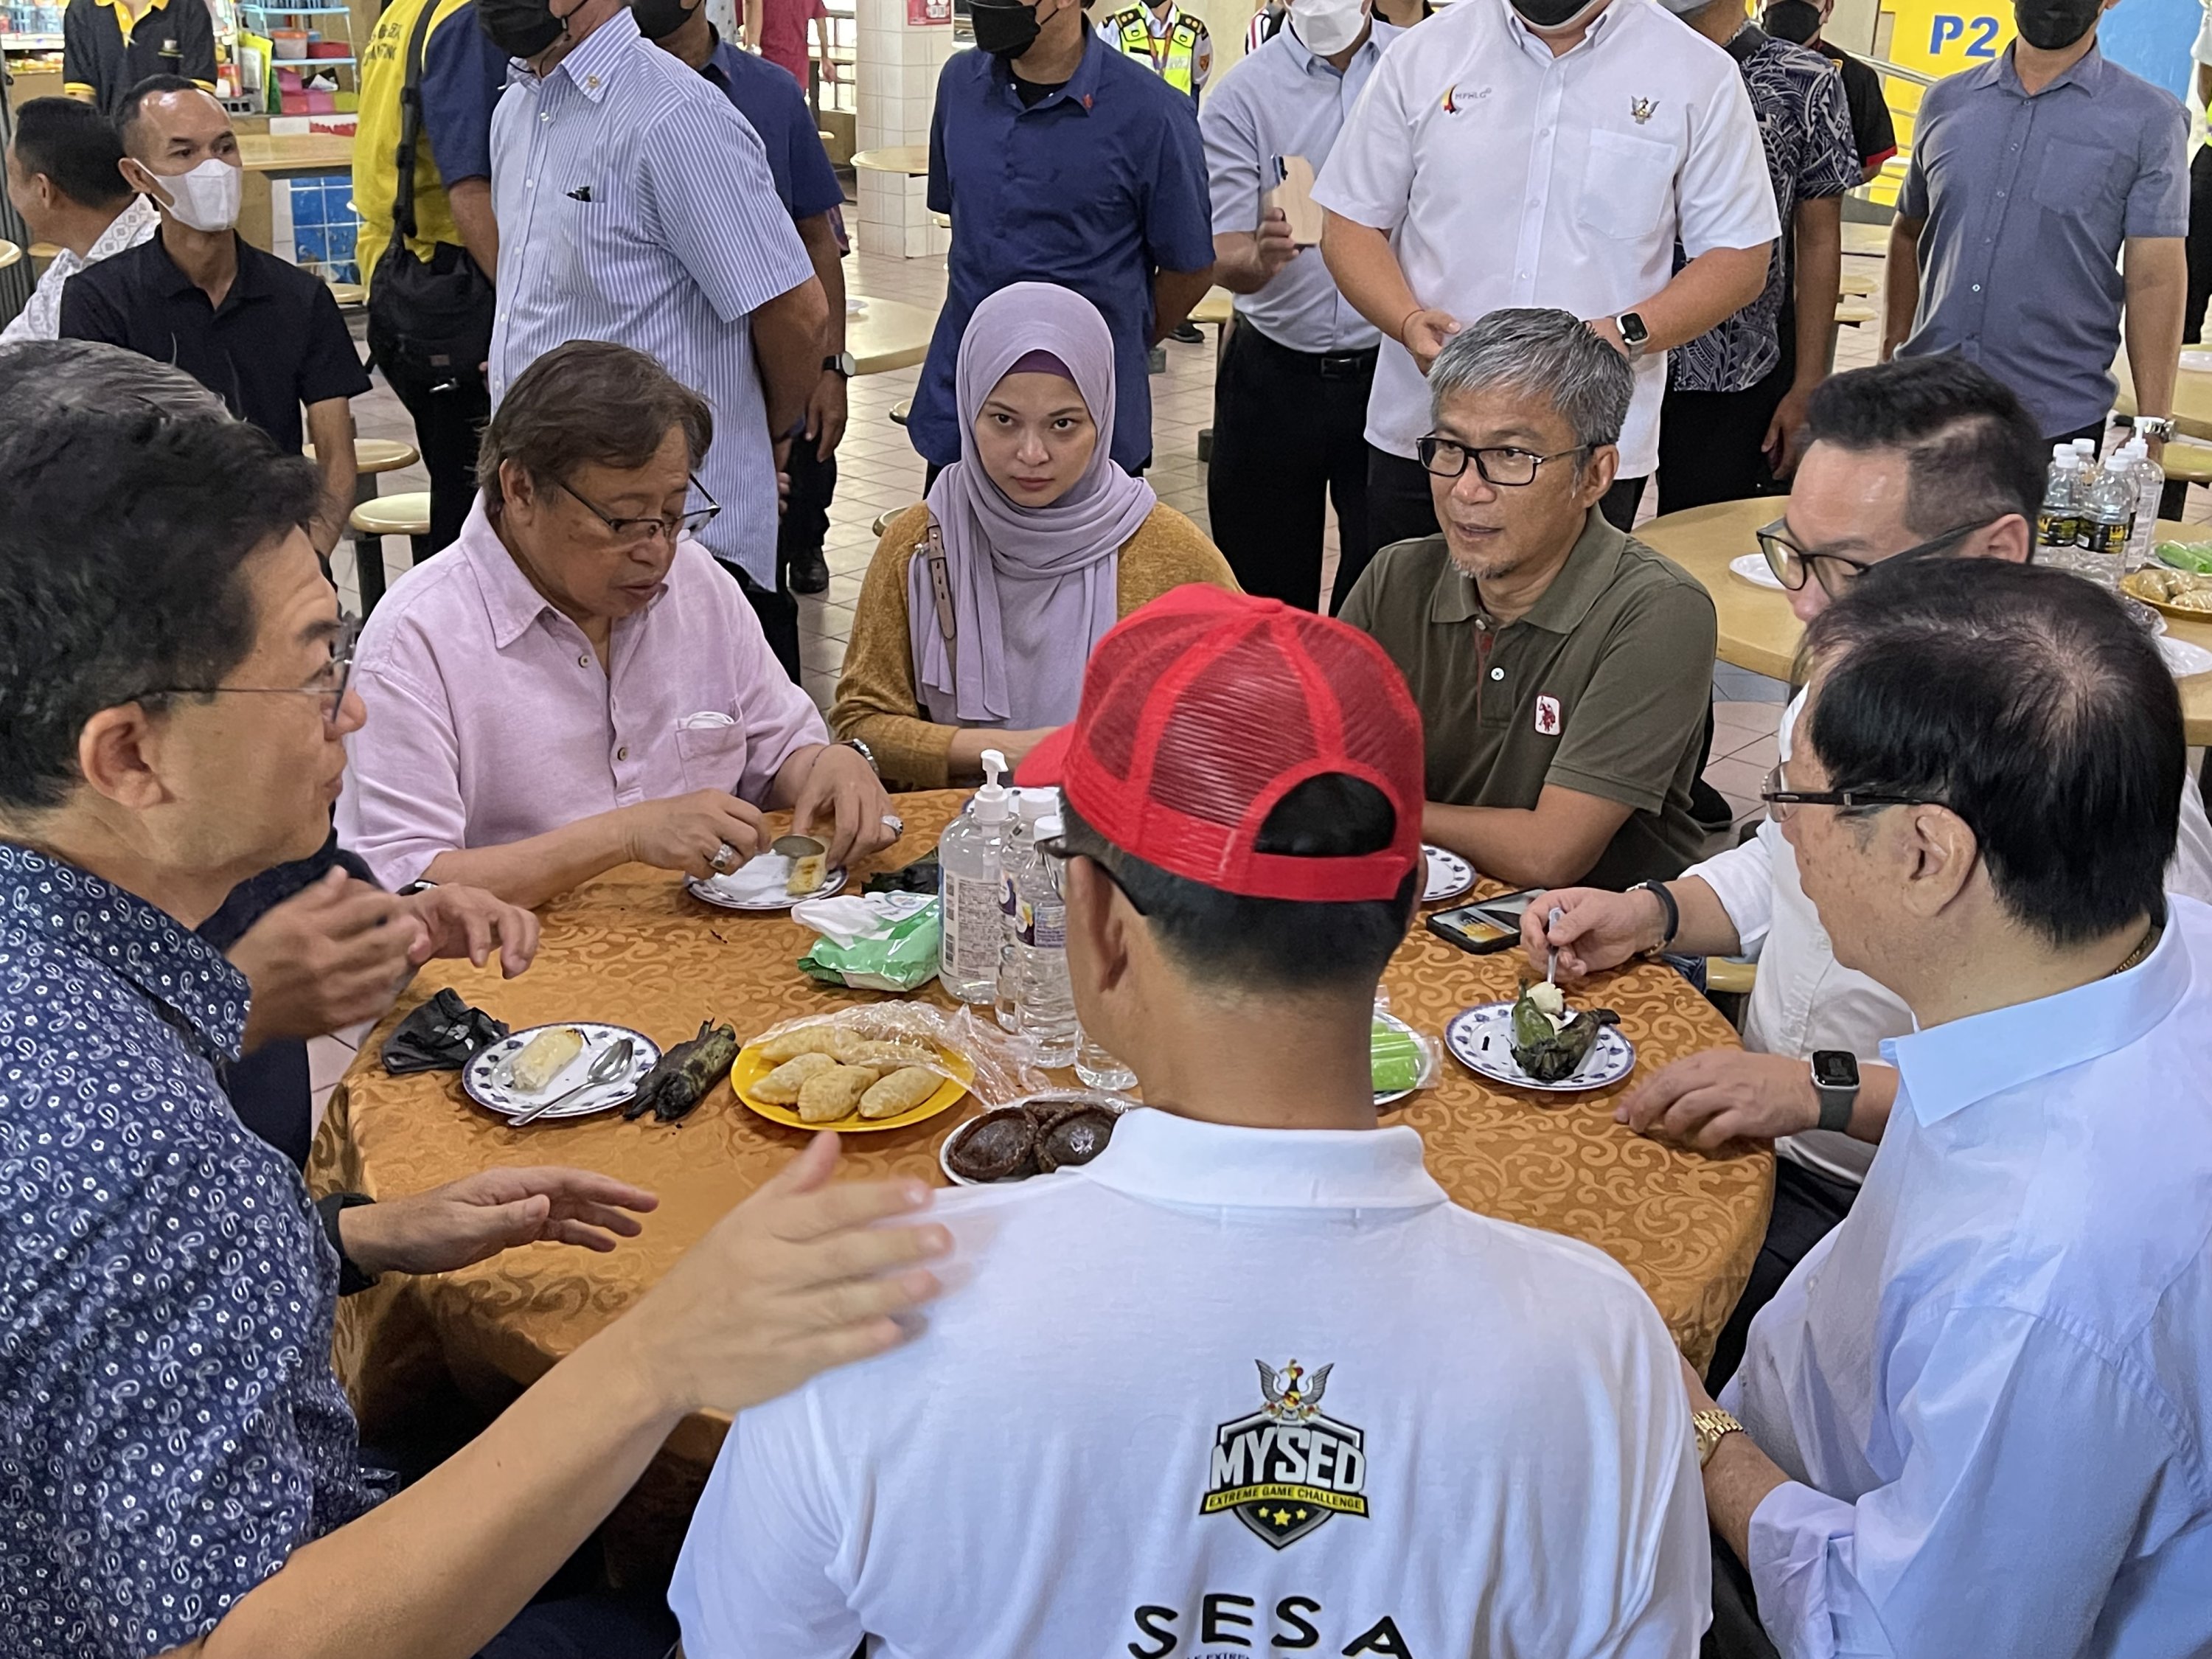 (From left clockwise) Robert, Johari, Dayang, Dr Annuar, Tiang, Vincent and Karim having breakfast at Sibu Central Market first floor.